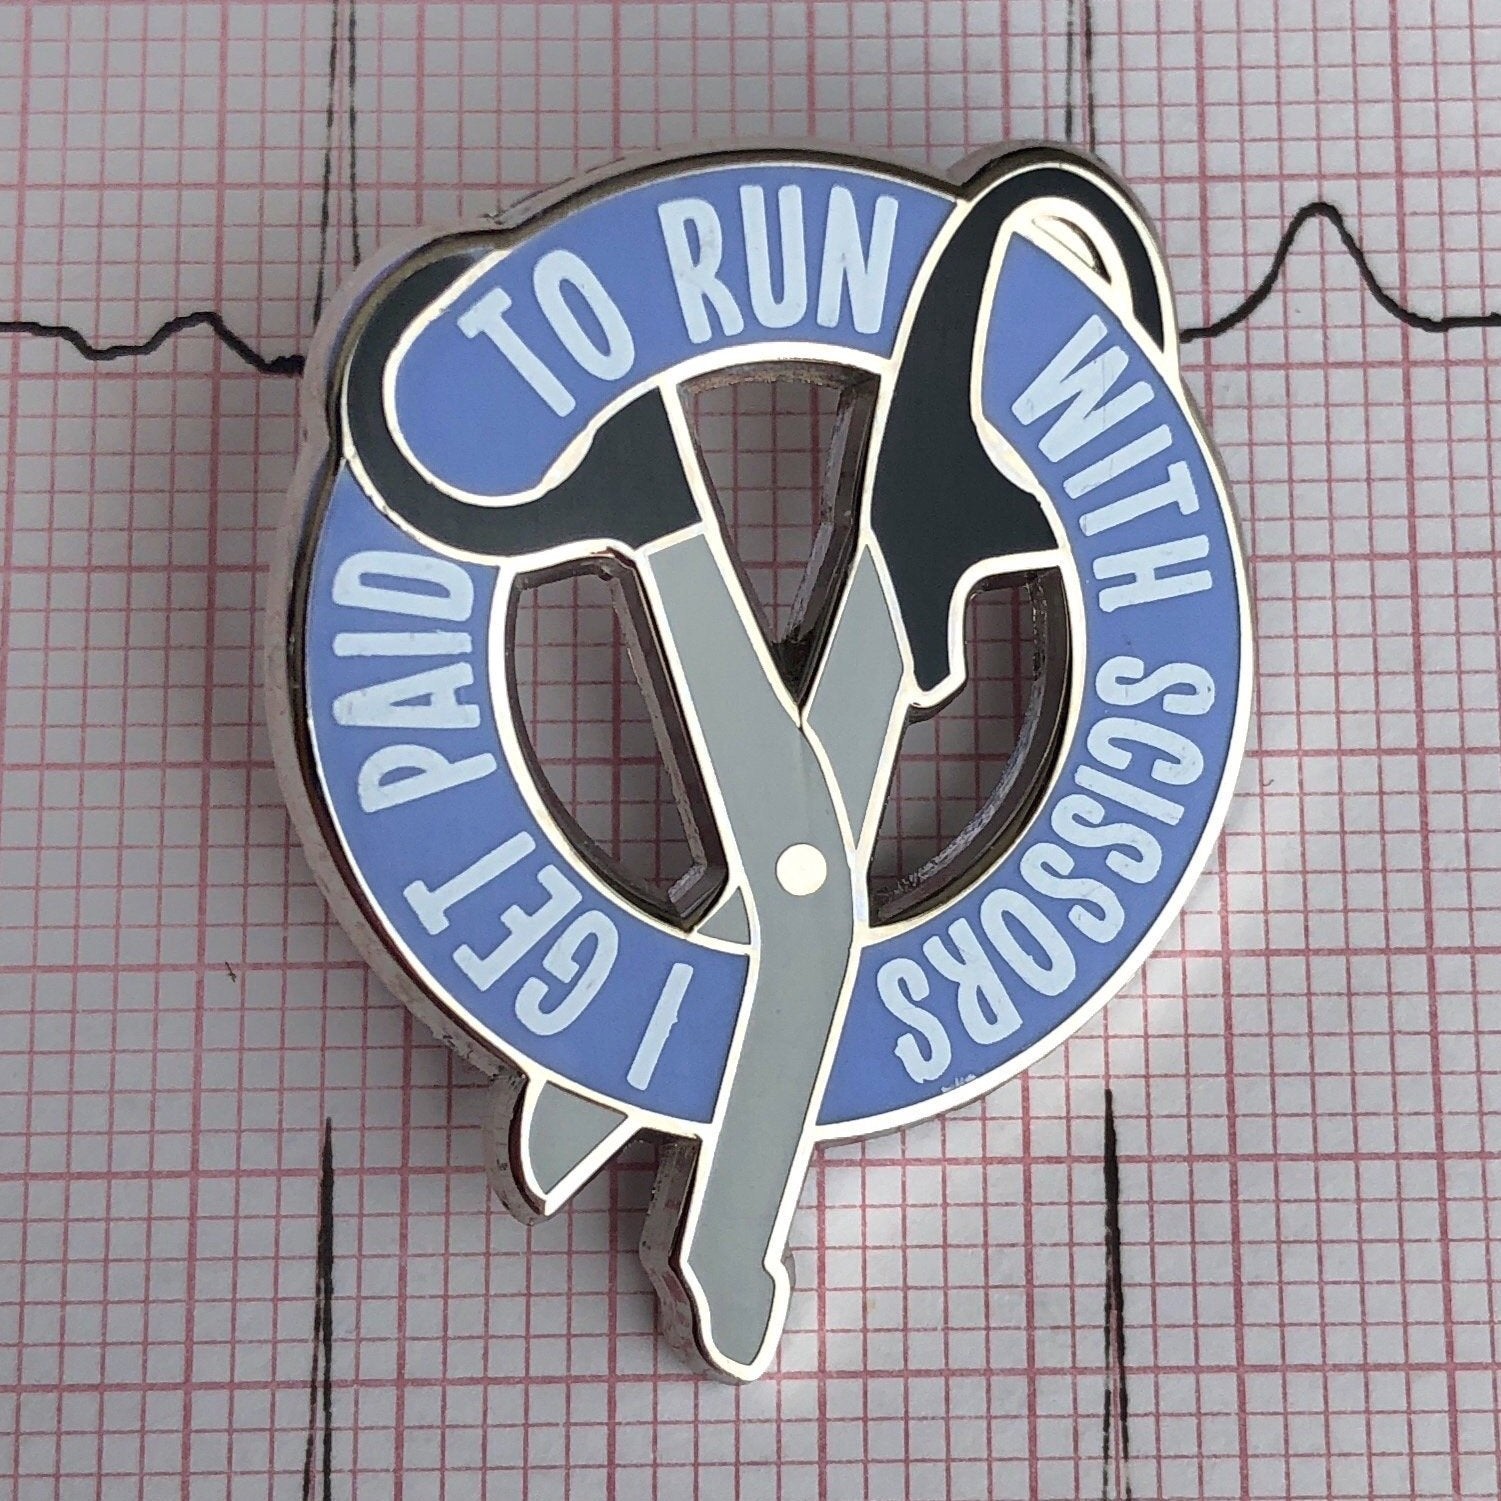 I Run With Scissors Pin - Rad Girl Creations - Medical Enamel Pin